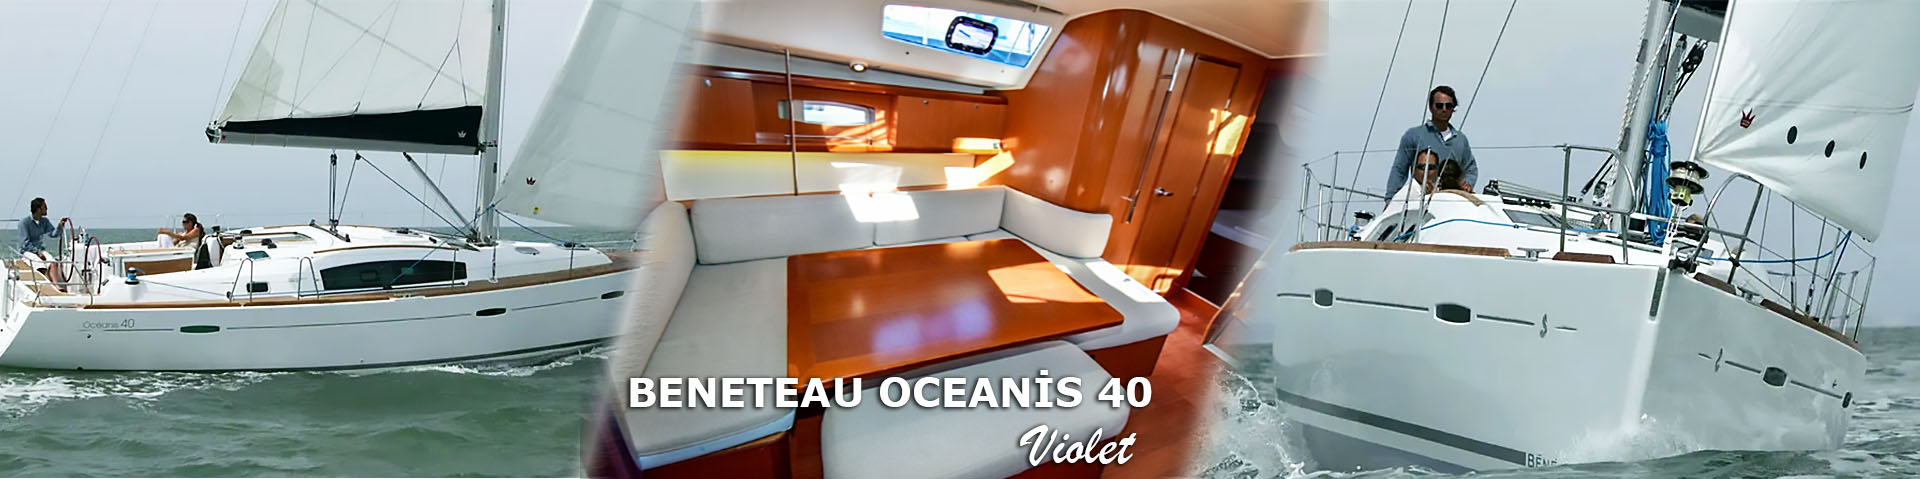 Beneteau Oceanis 40 VIOLET yacht charter